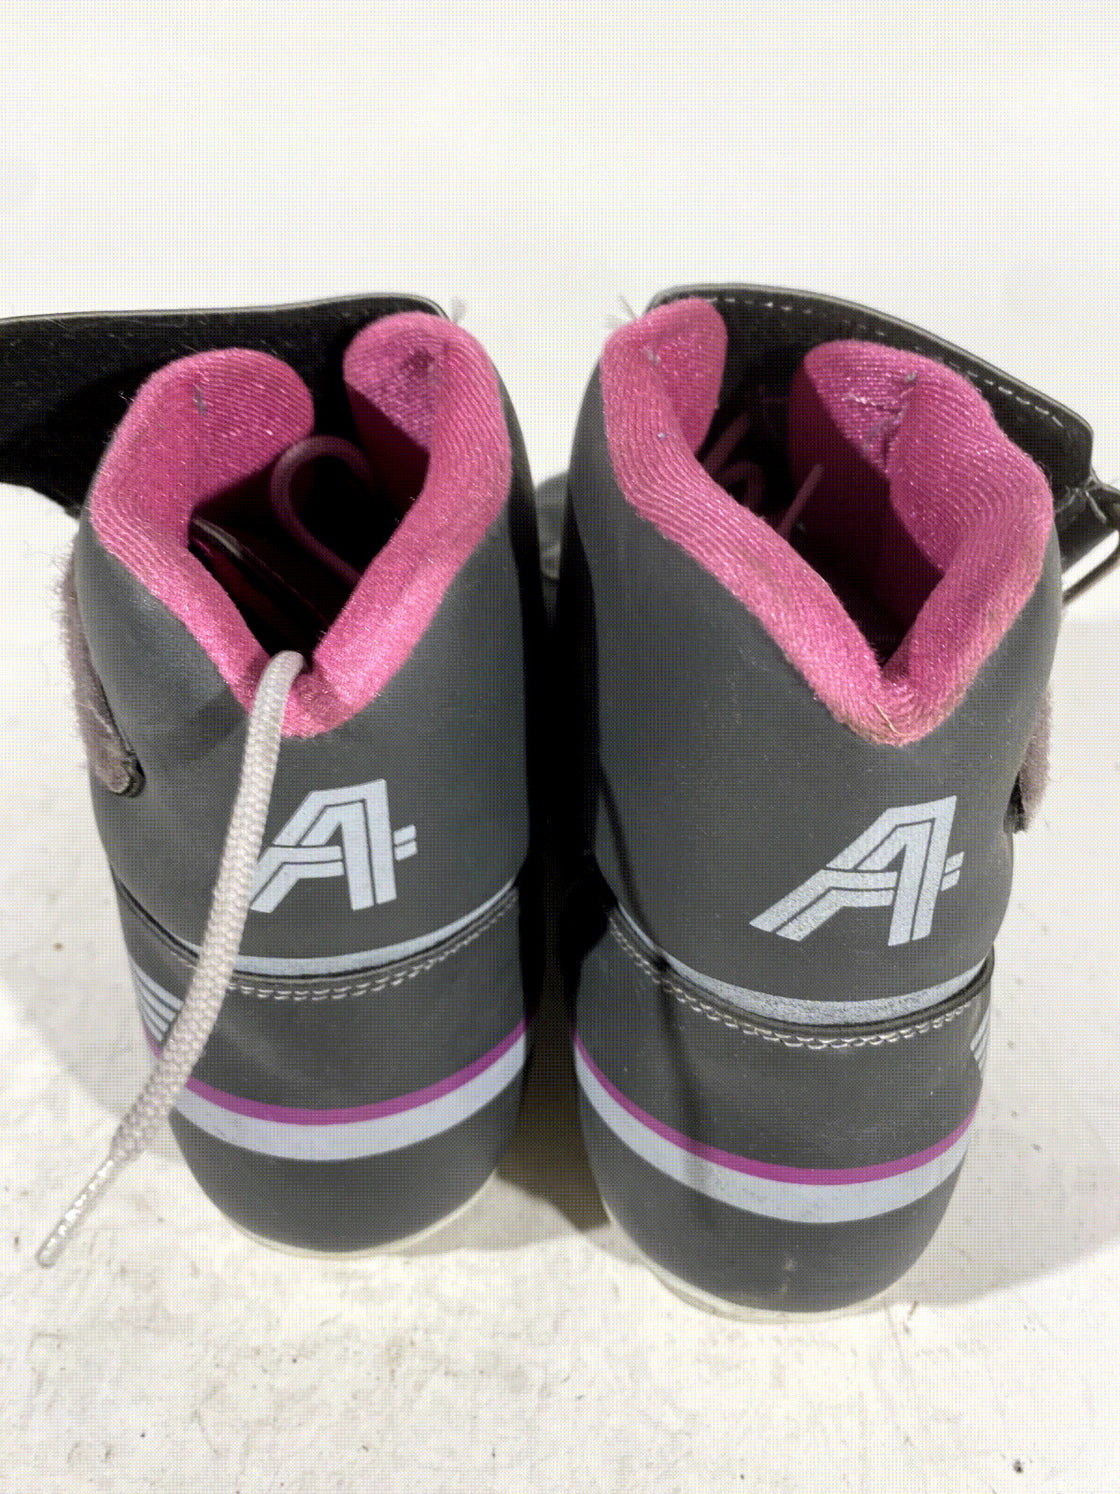 Aaltonen Vintage Nordic Cross Country Ski Boots EU45 US11.5 SNS Old Bindings